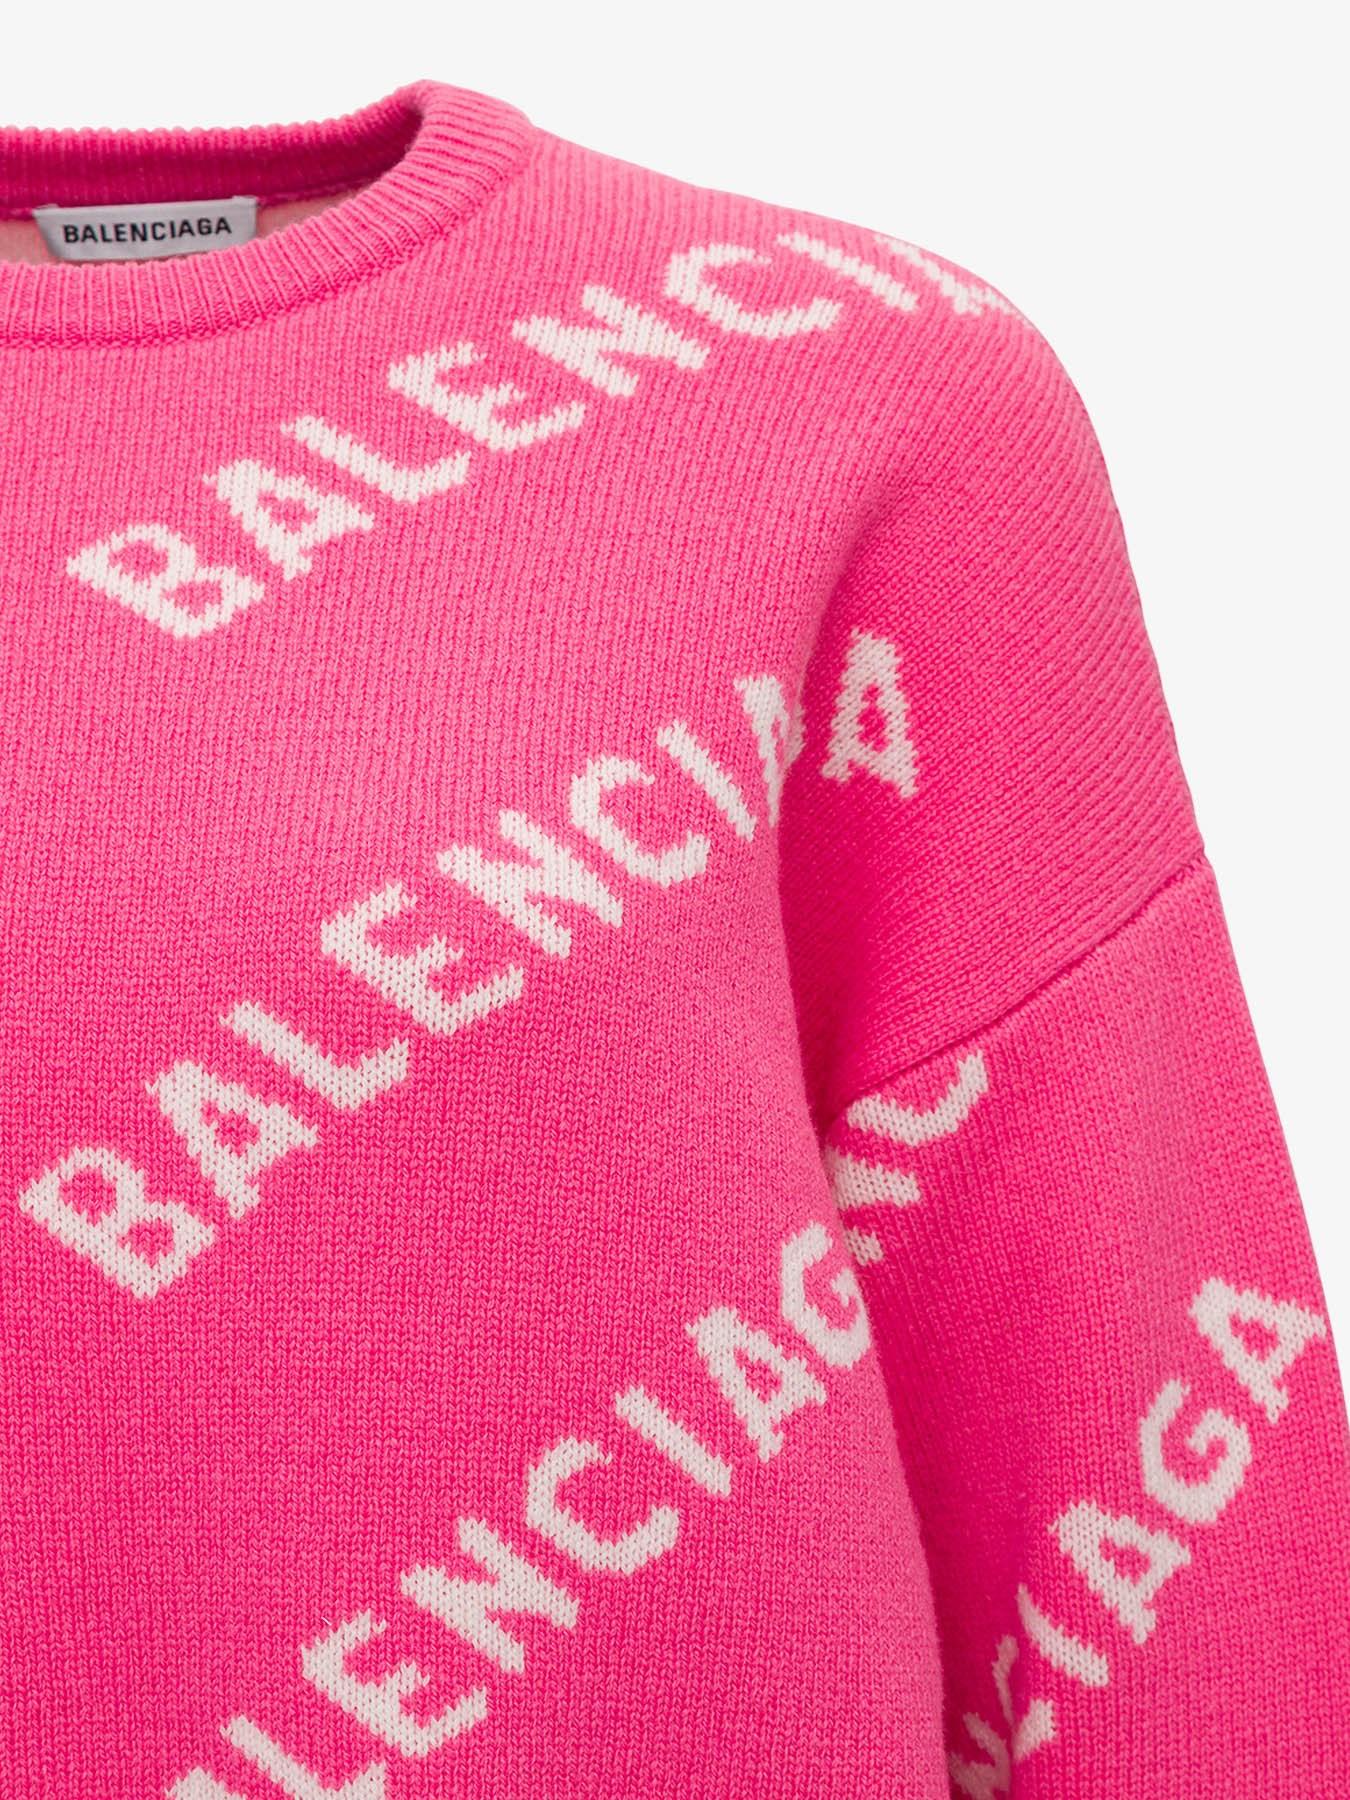 Balenciaga Synthetic Allover Logo Crewneck in Pink/White (Pink) - Save 59%  | Lyst